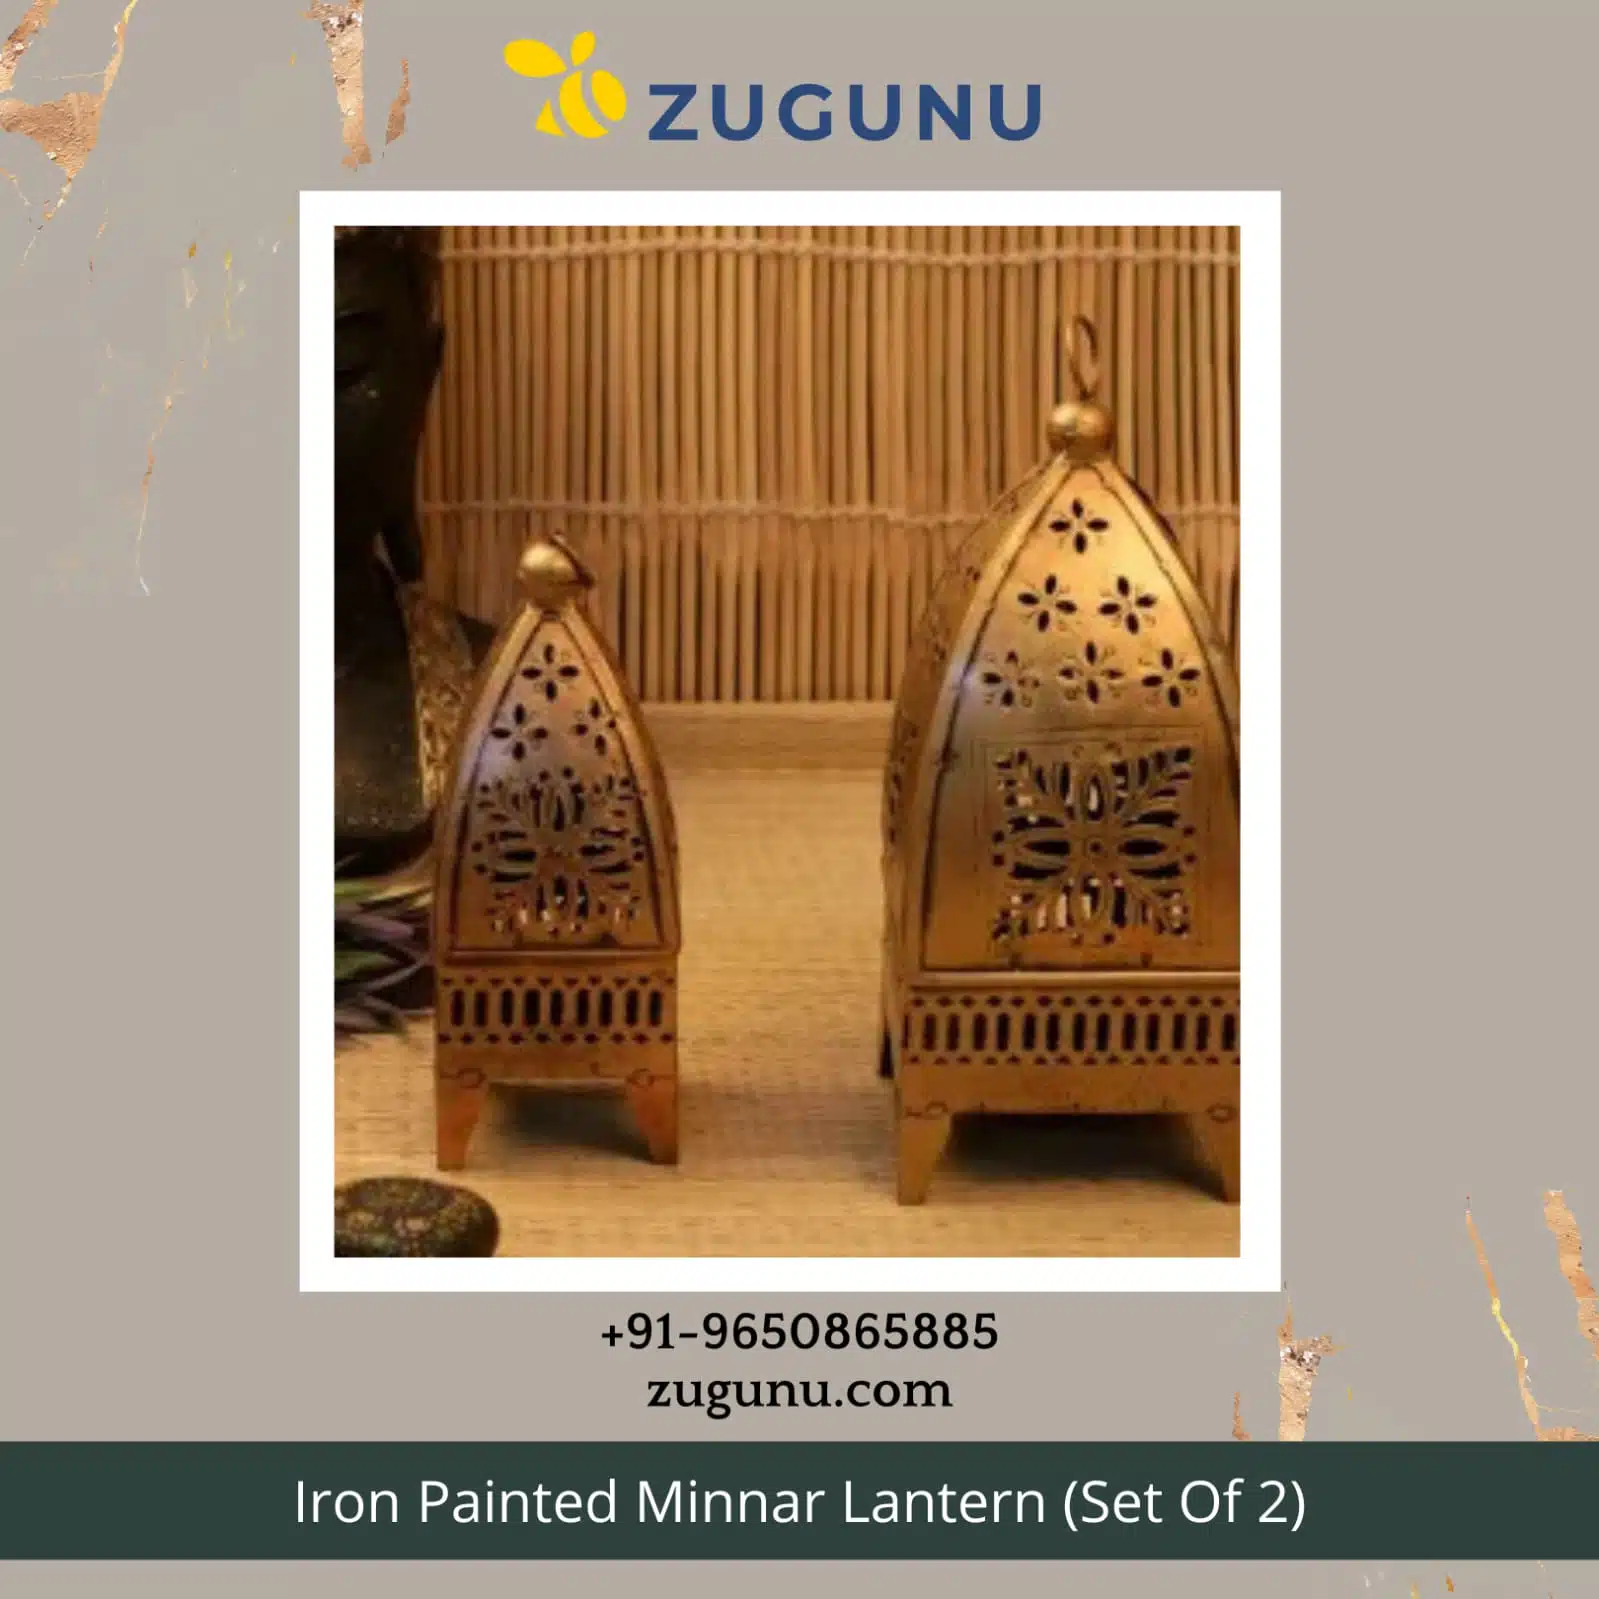 Set Of 2 Iron Painted Minnar Lantern Zugunu